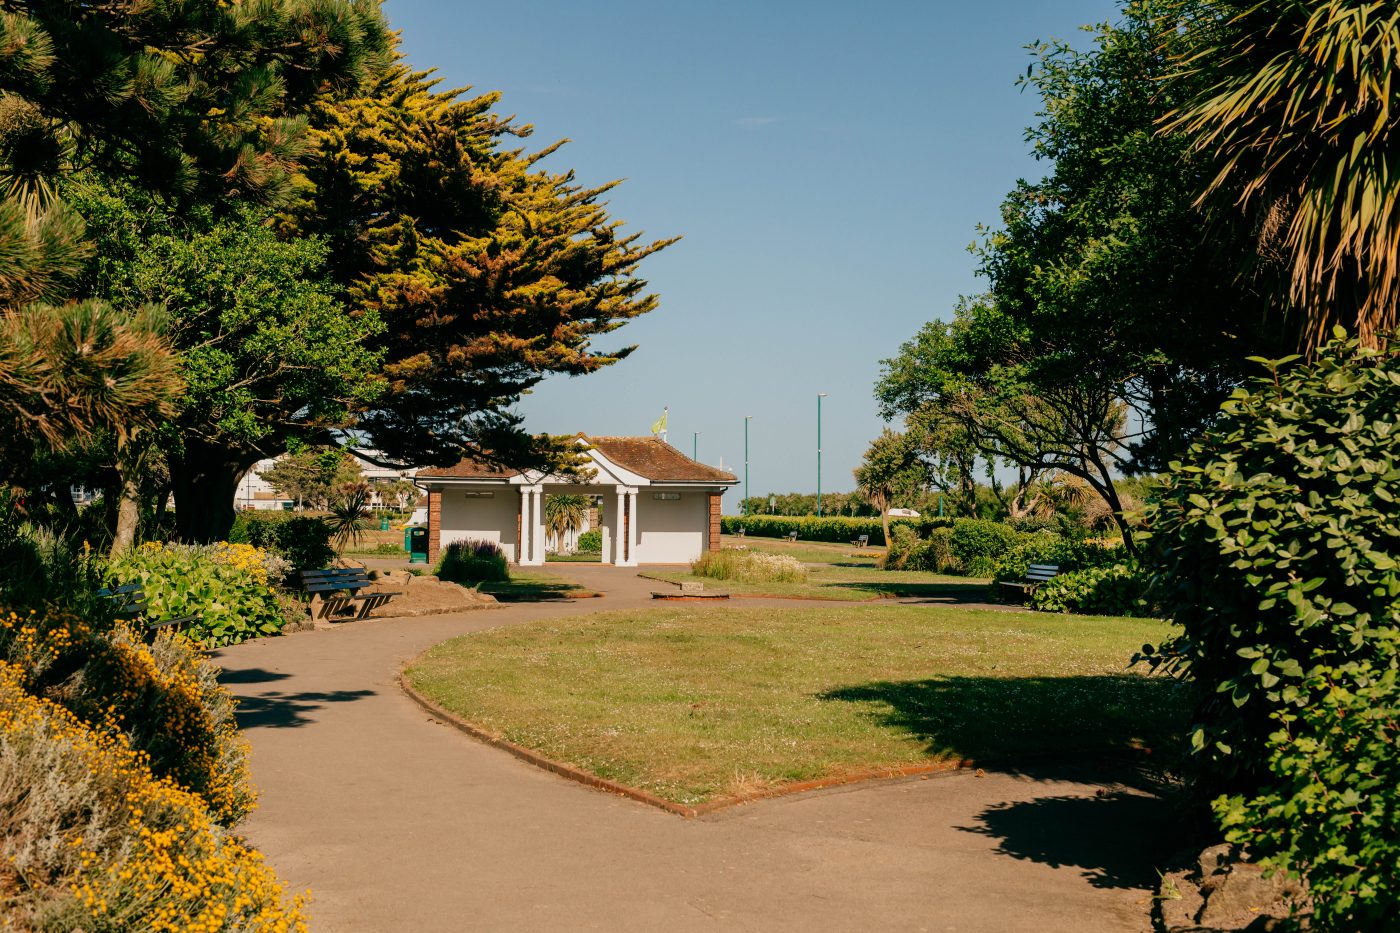 Marine Park Gardens, Bognor Regis. 20th June 2022. Peter Flude